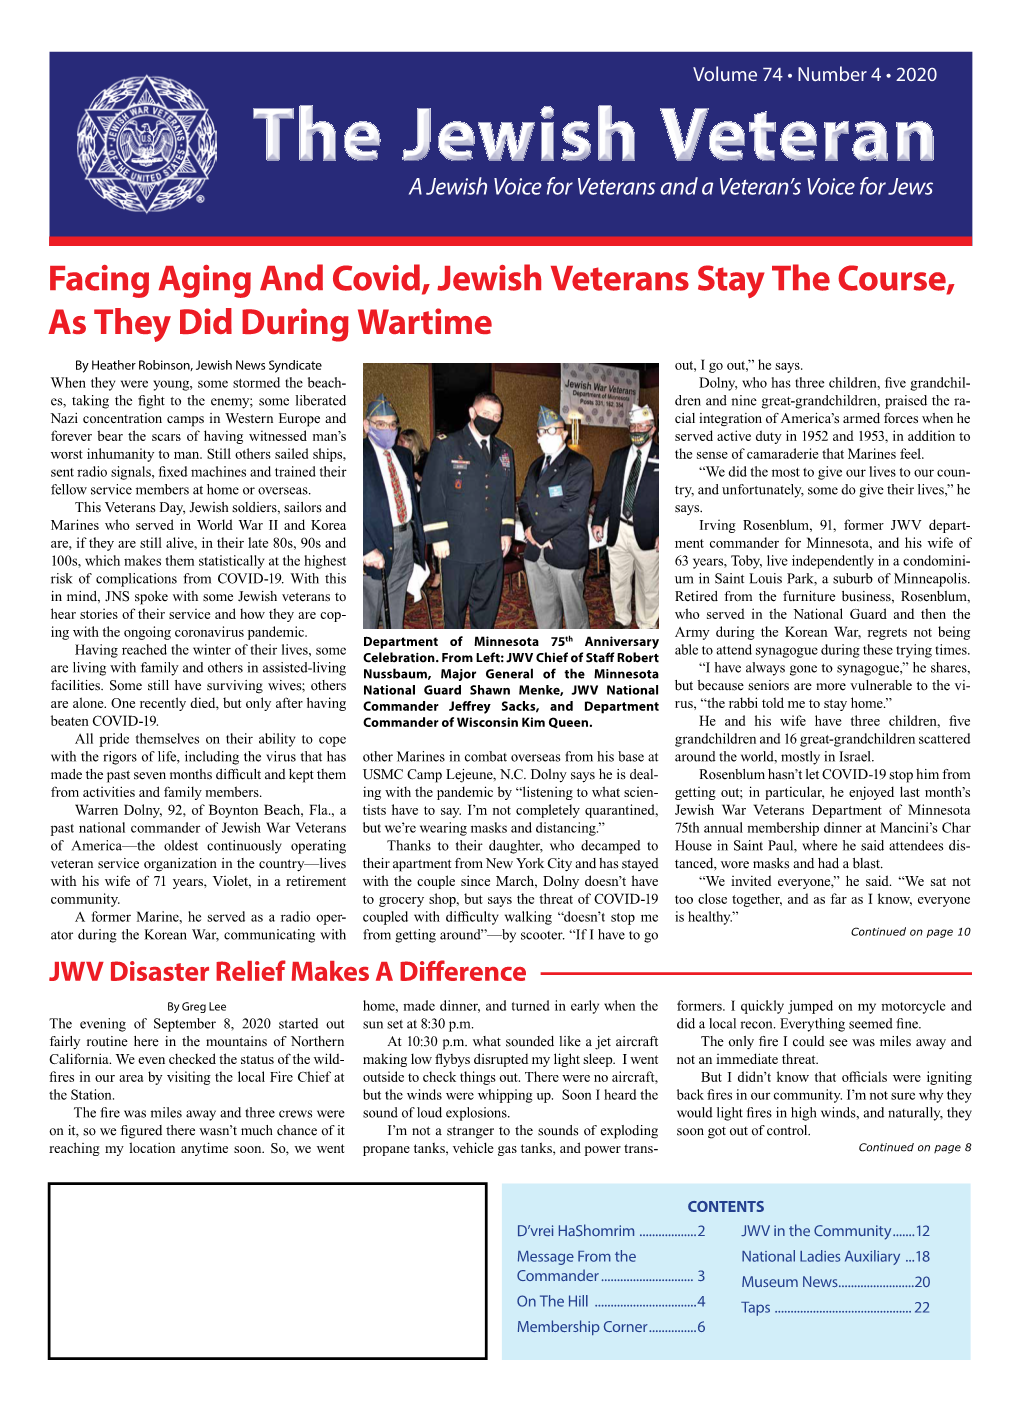 The Jewish Veteran Issue 4 2020